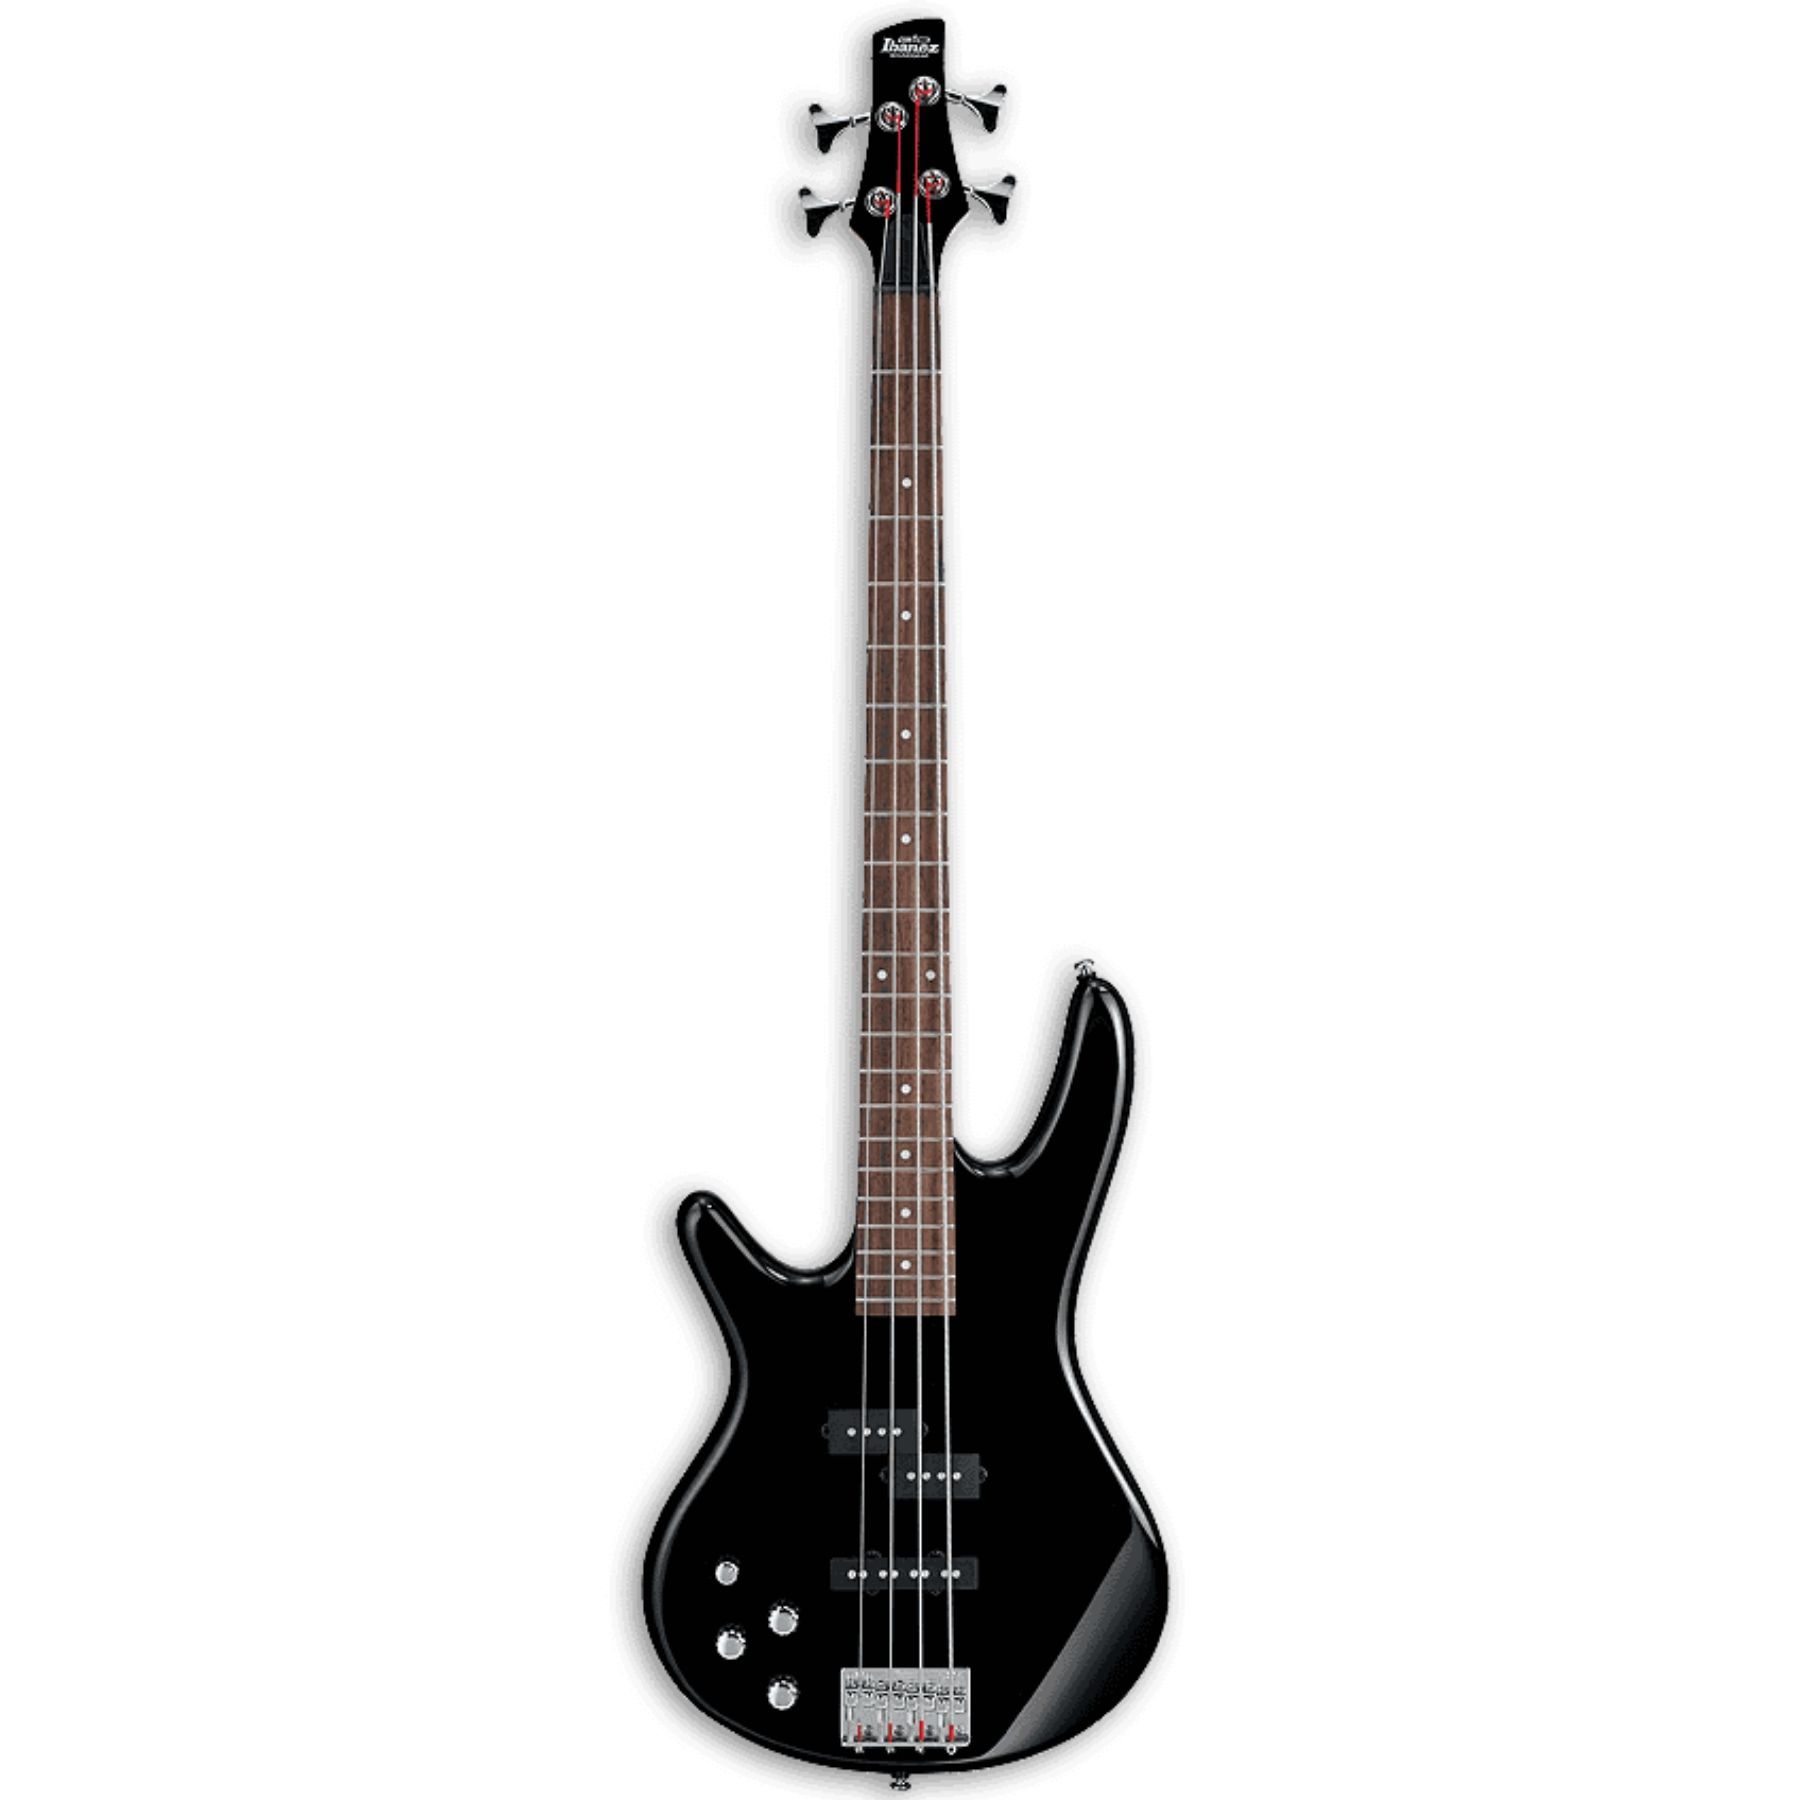 Buy Ibanez GSR200L bass guitar online in India